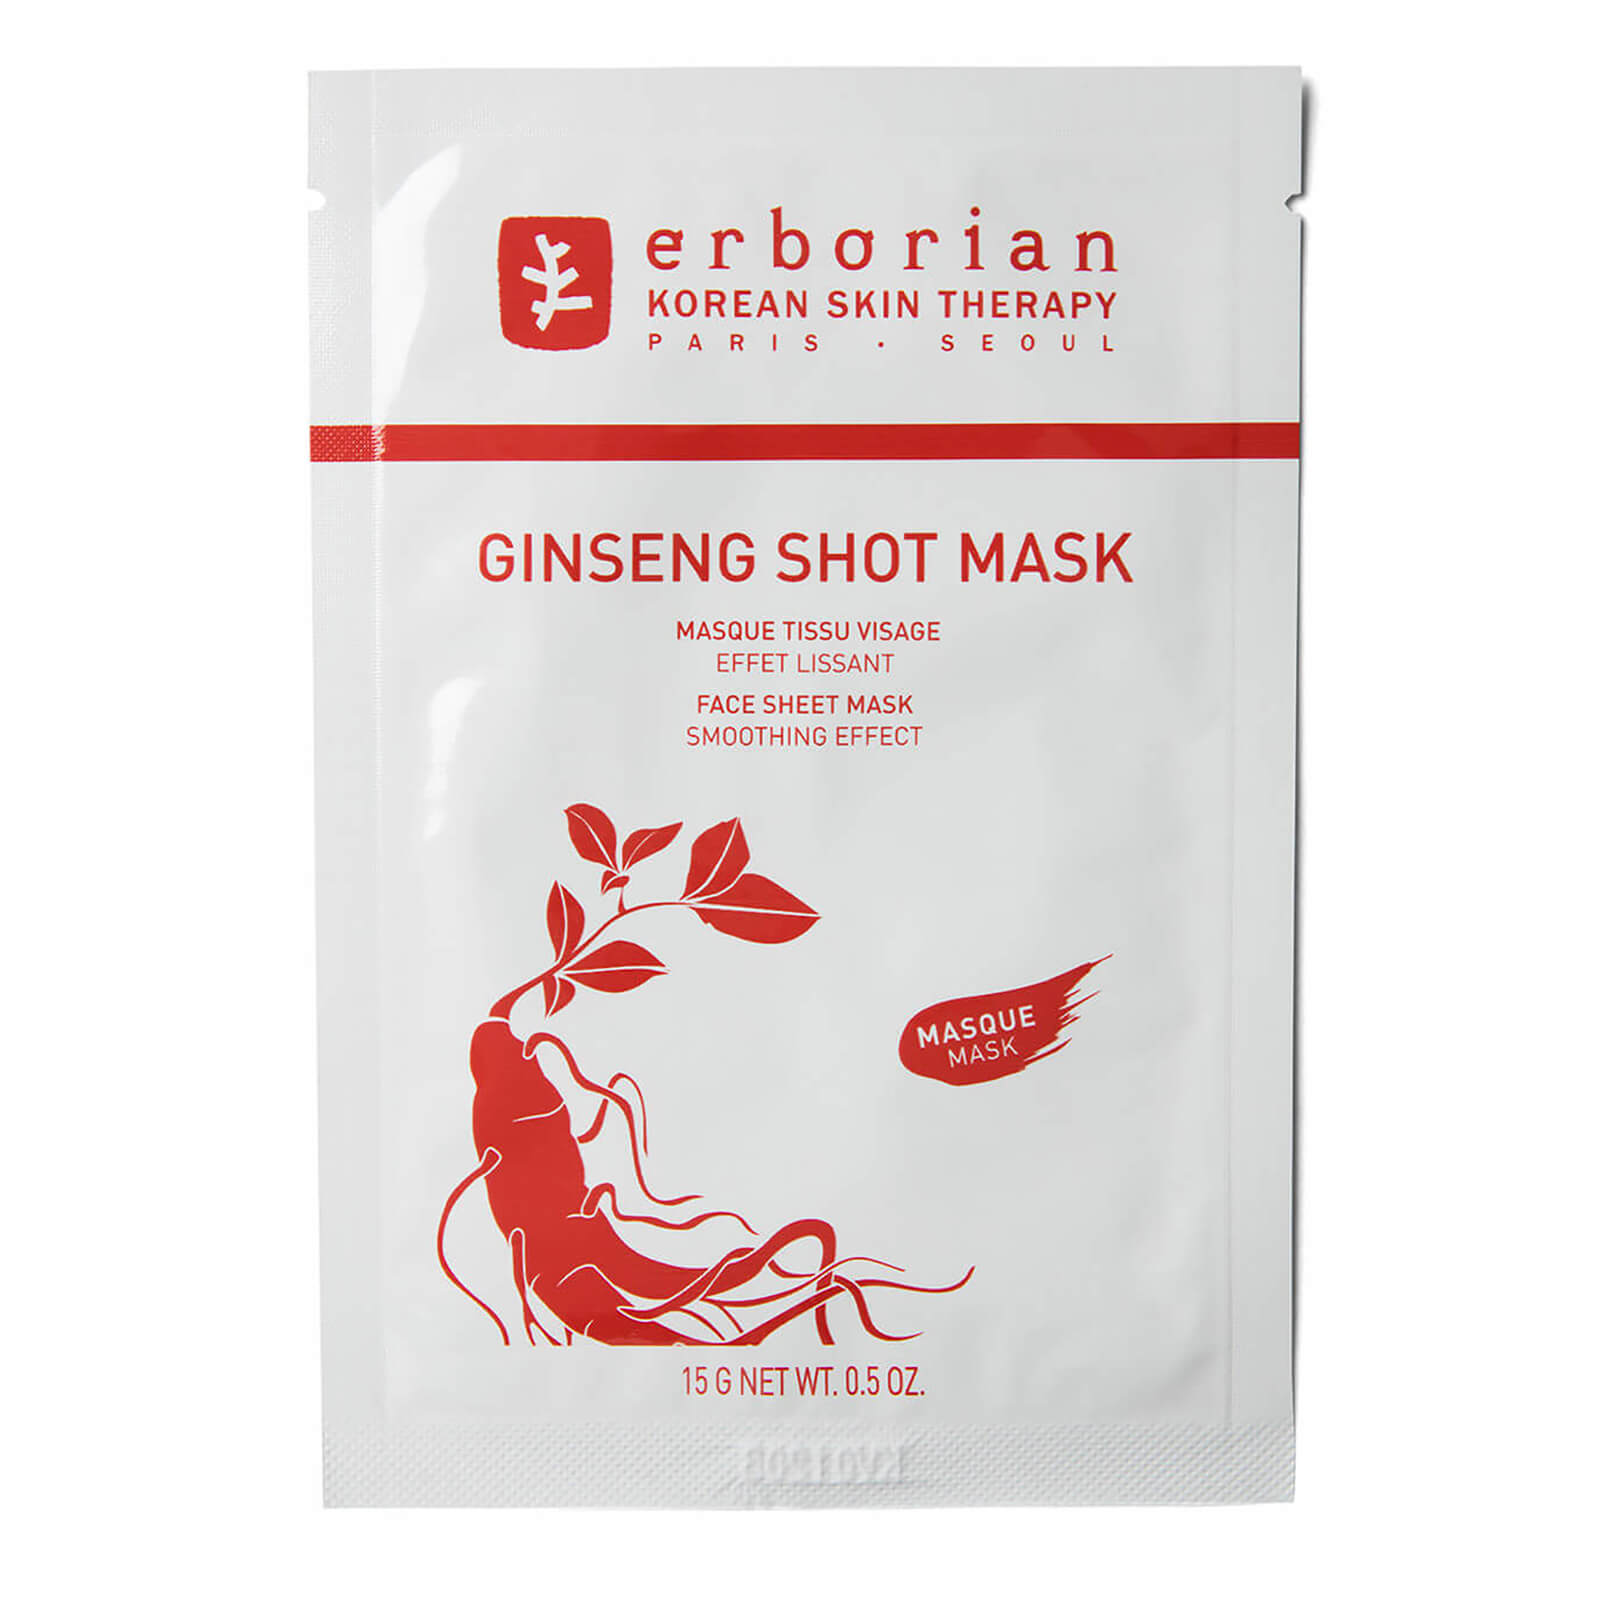 Erborian Gezichtsmasker Verzachtend Effect  - Ginseng Shot Mask Gezichtsmasker Verzachtend Effect